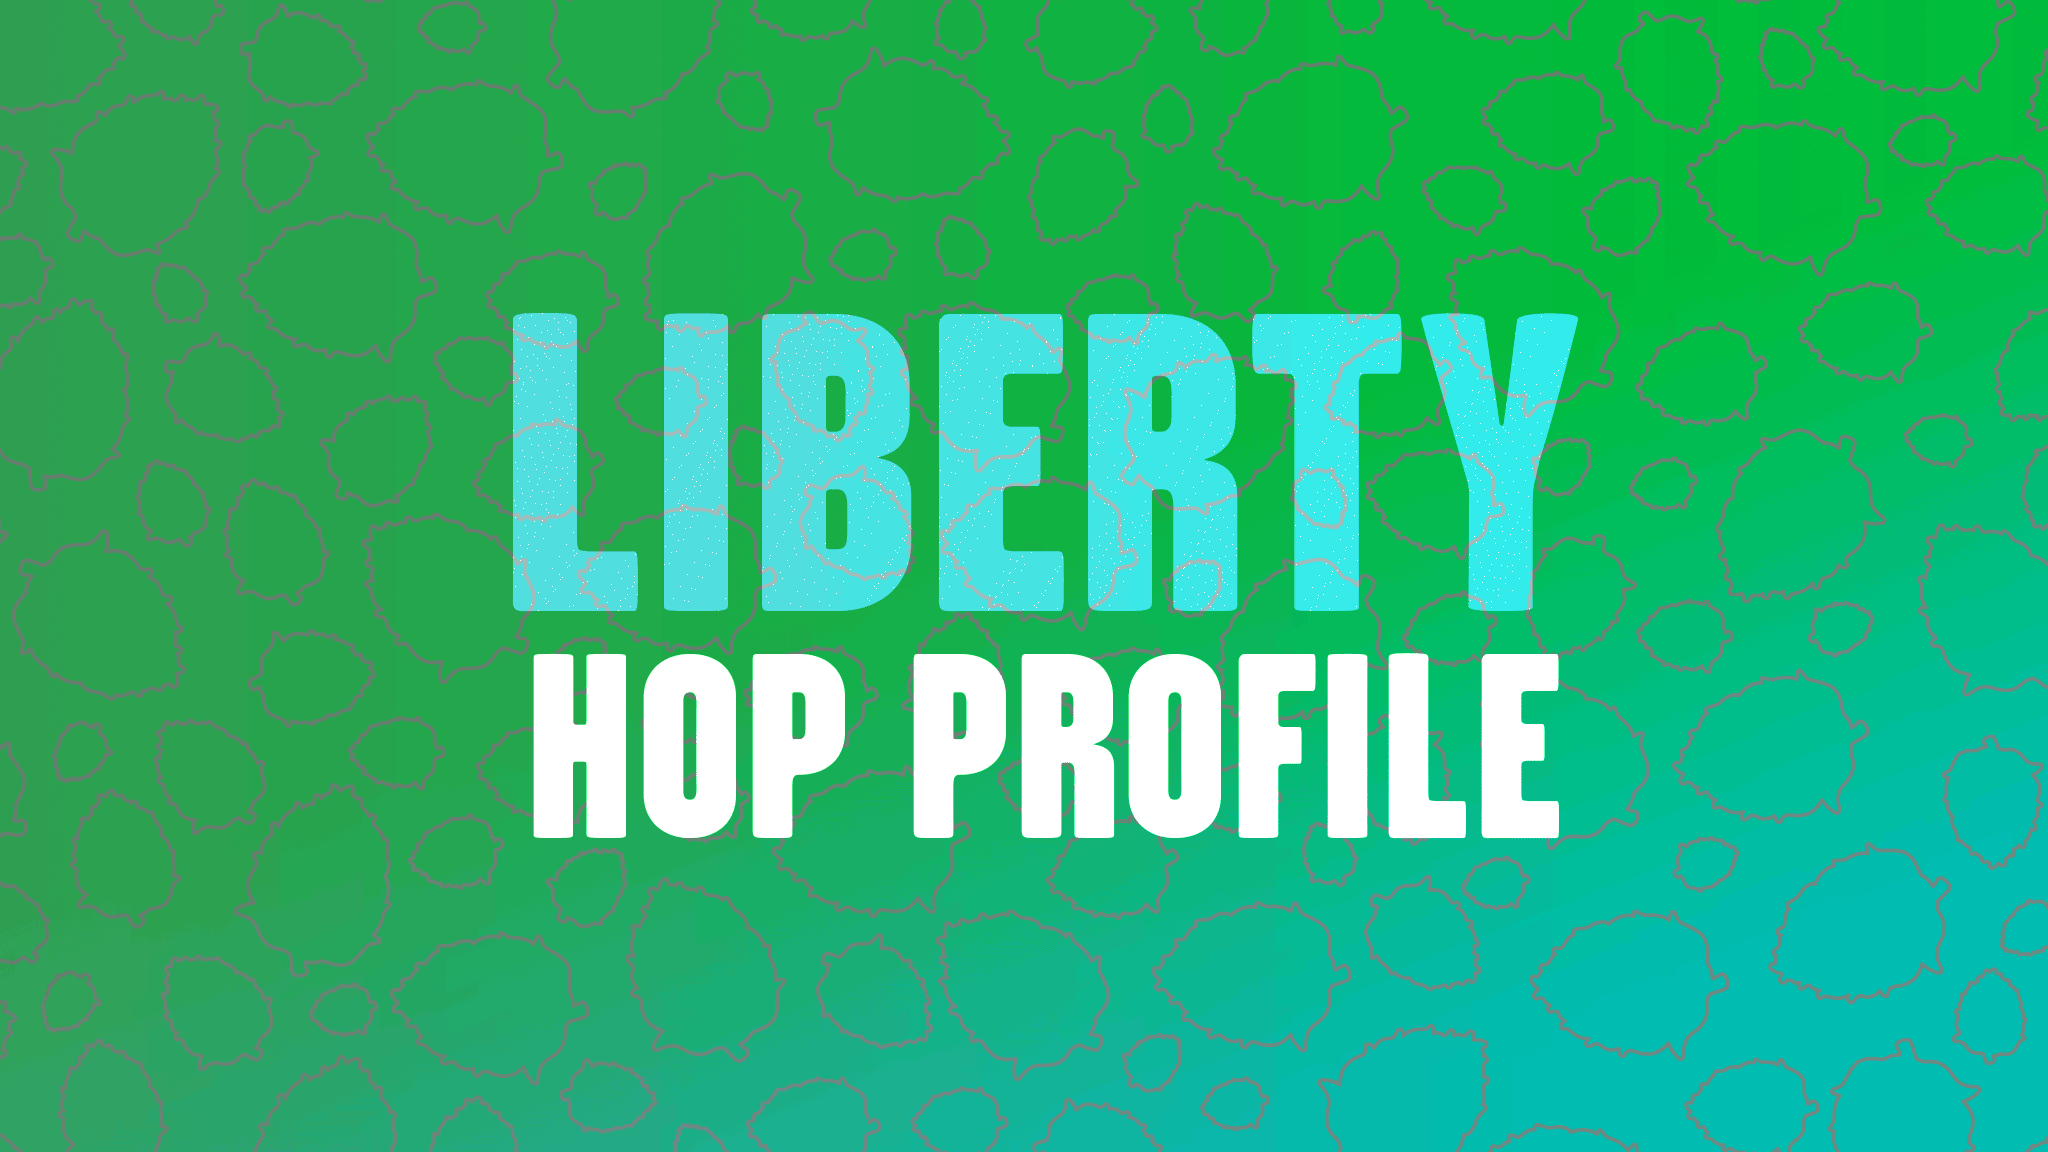 Hop Profile: Liberty